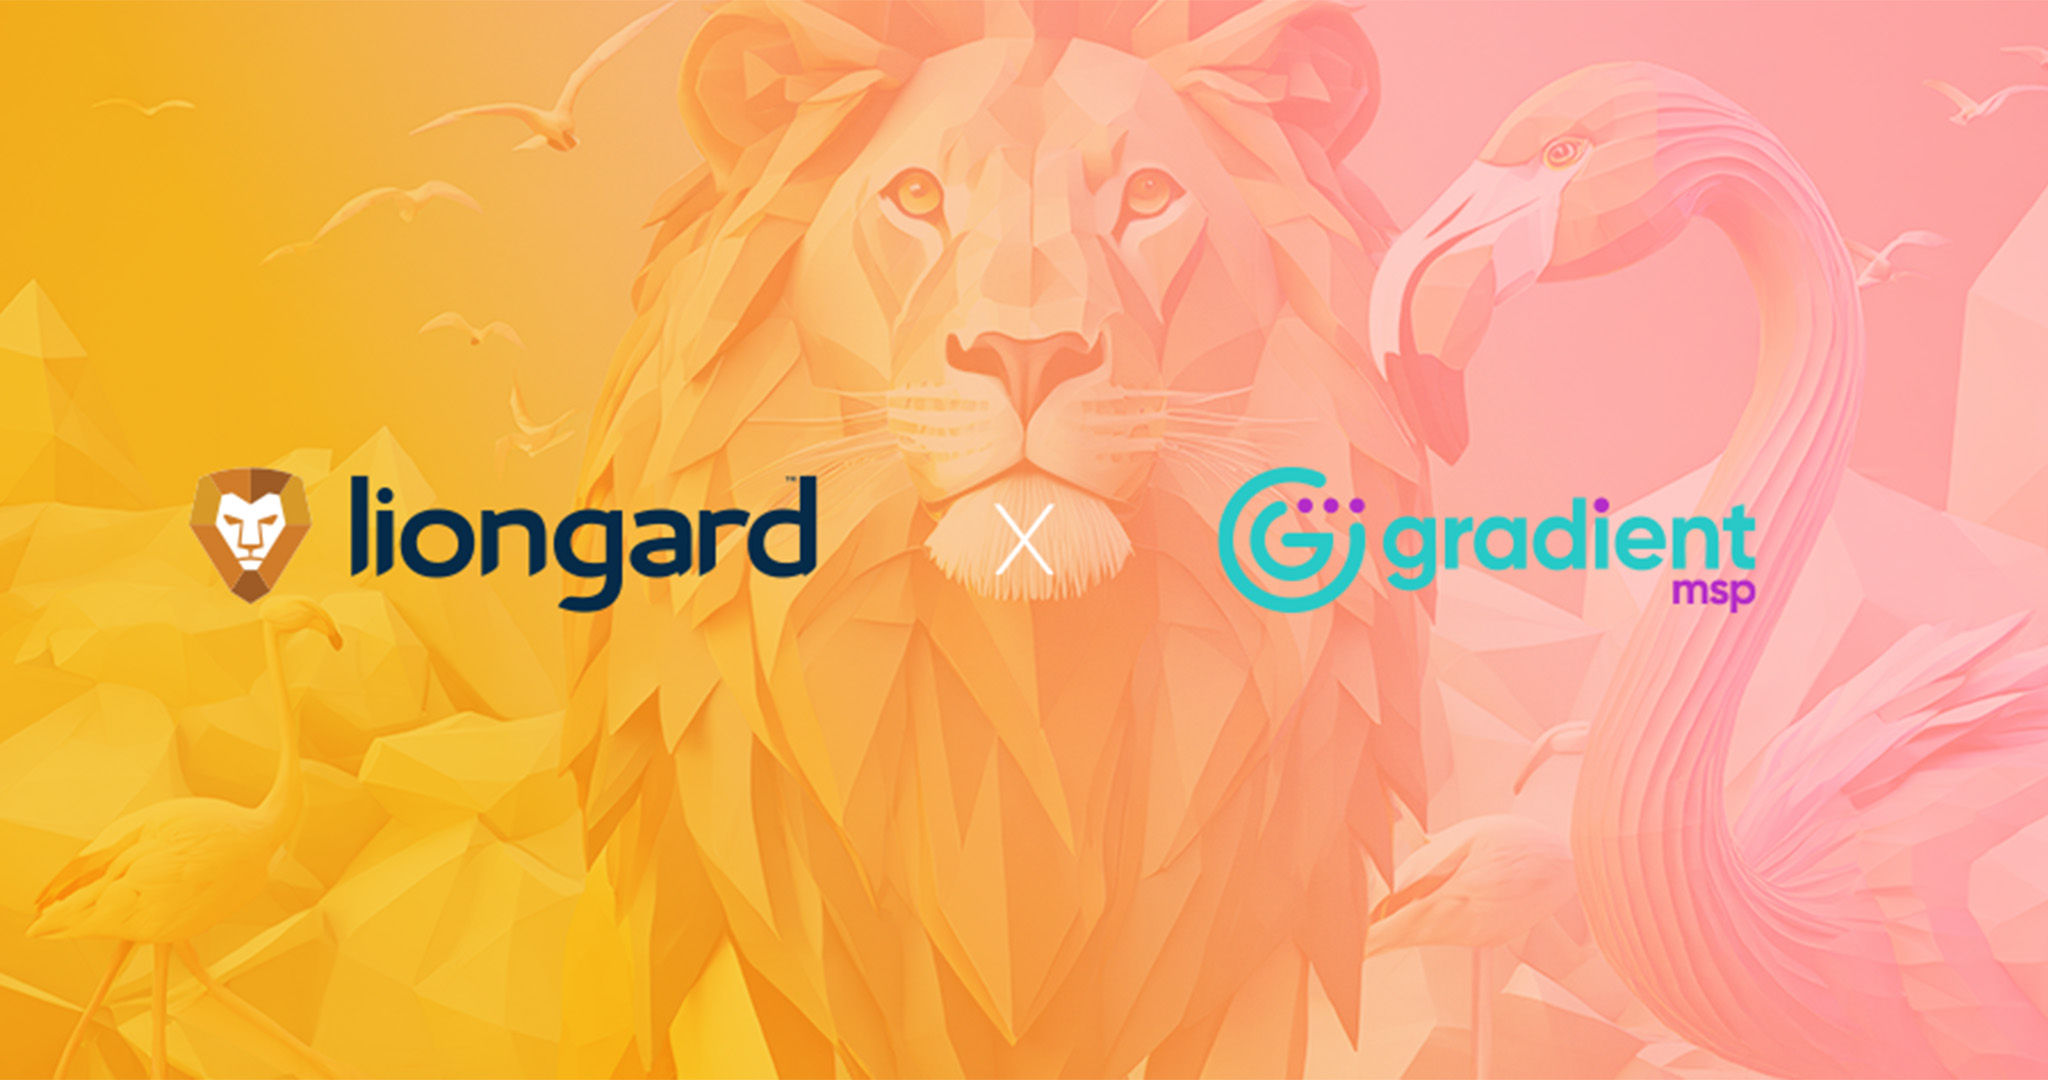 Liongard x Gradient